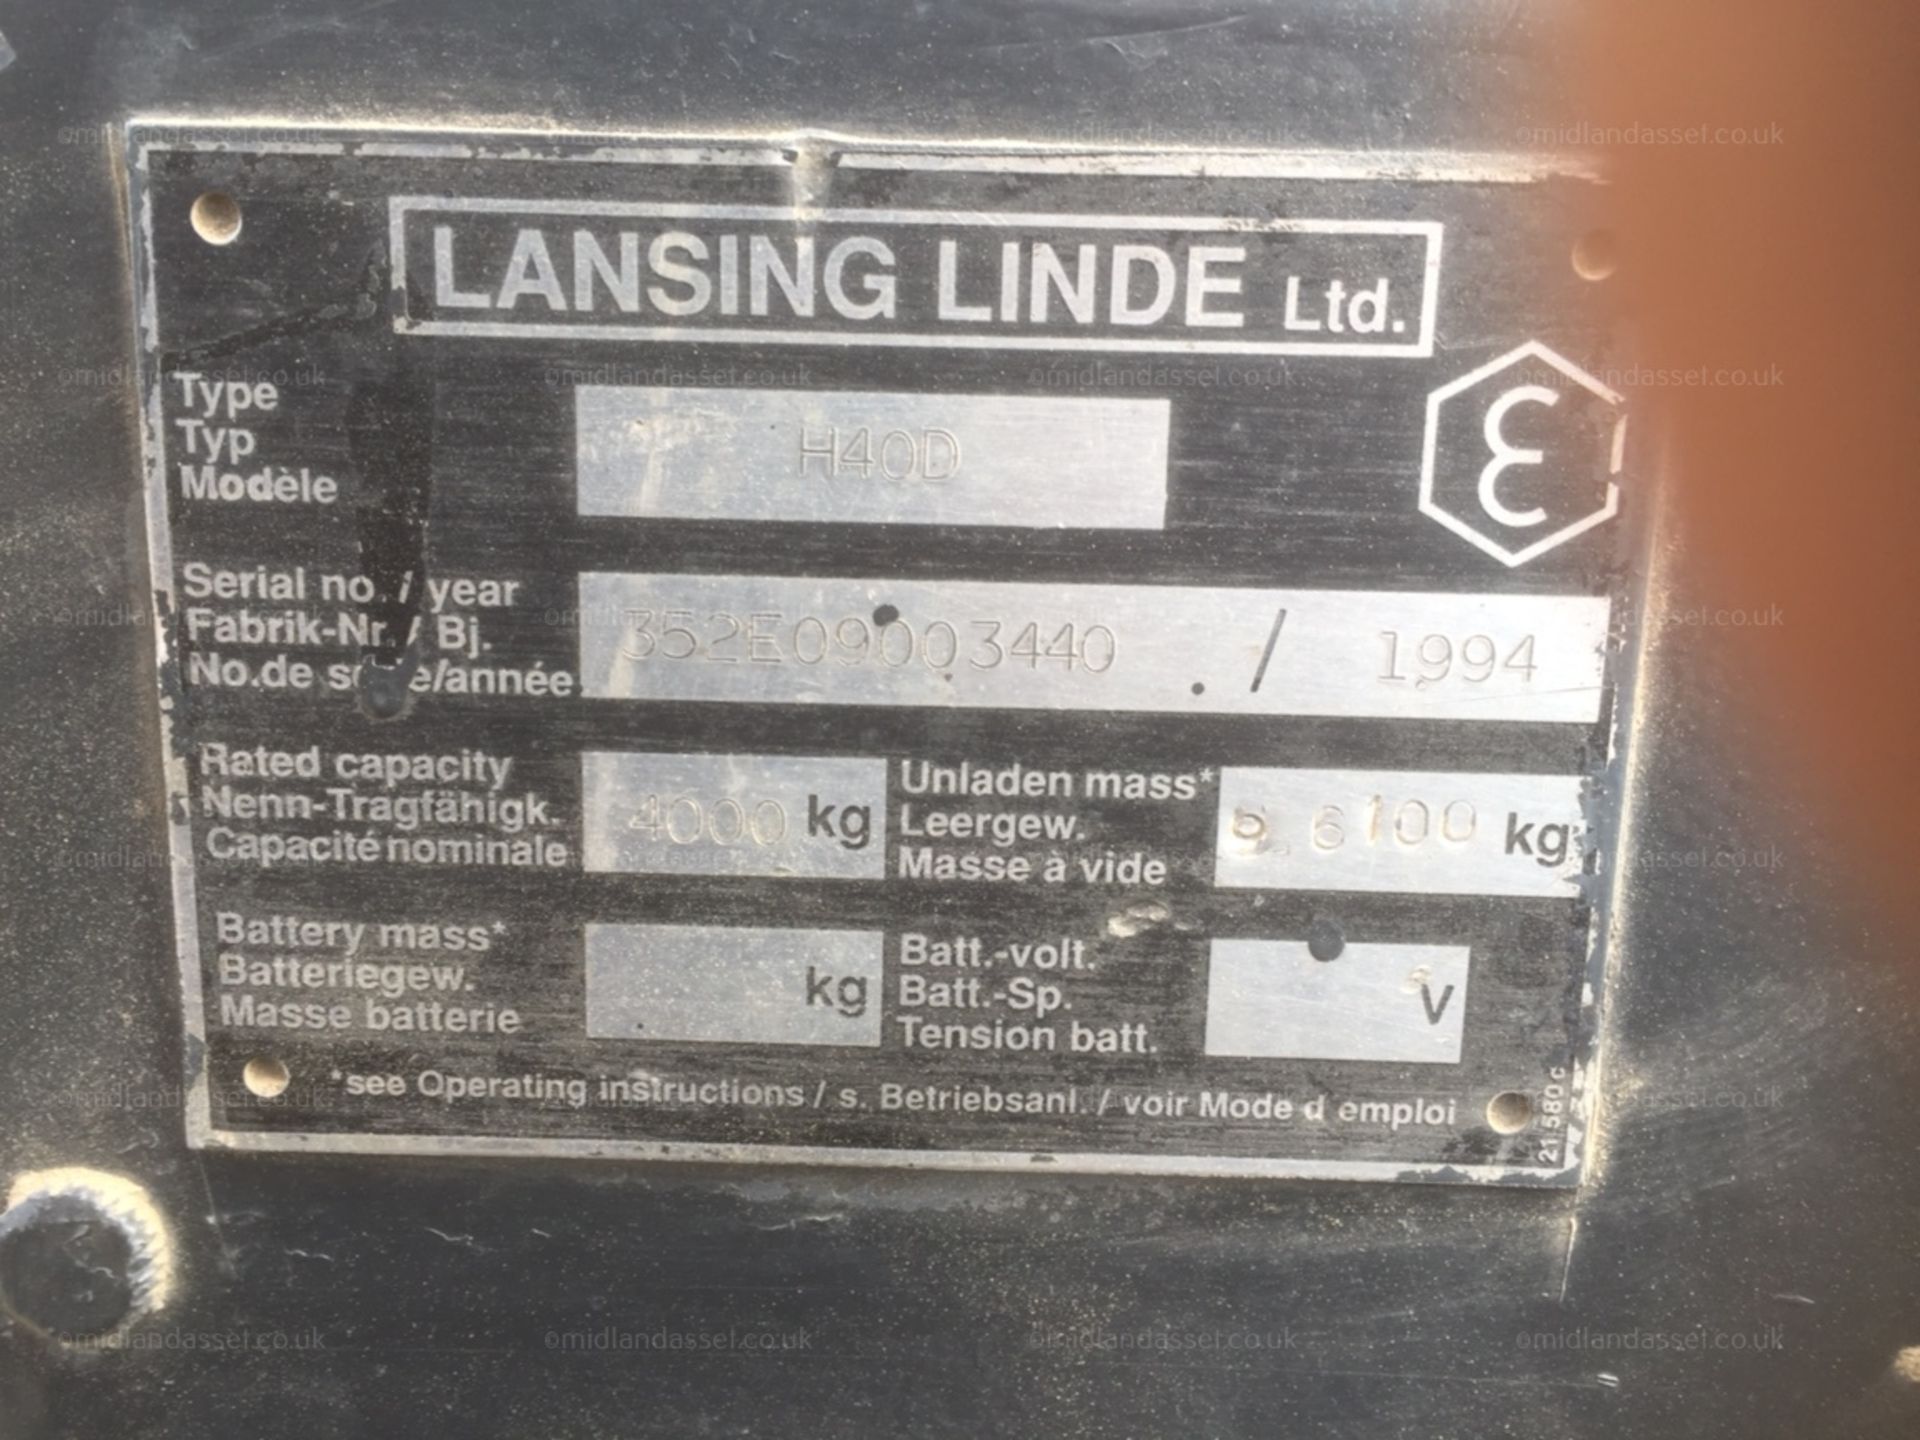 1994 LANSING LINDE 4 TONNE FORK LIFT - Image 6 of 6